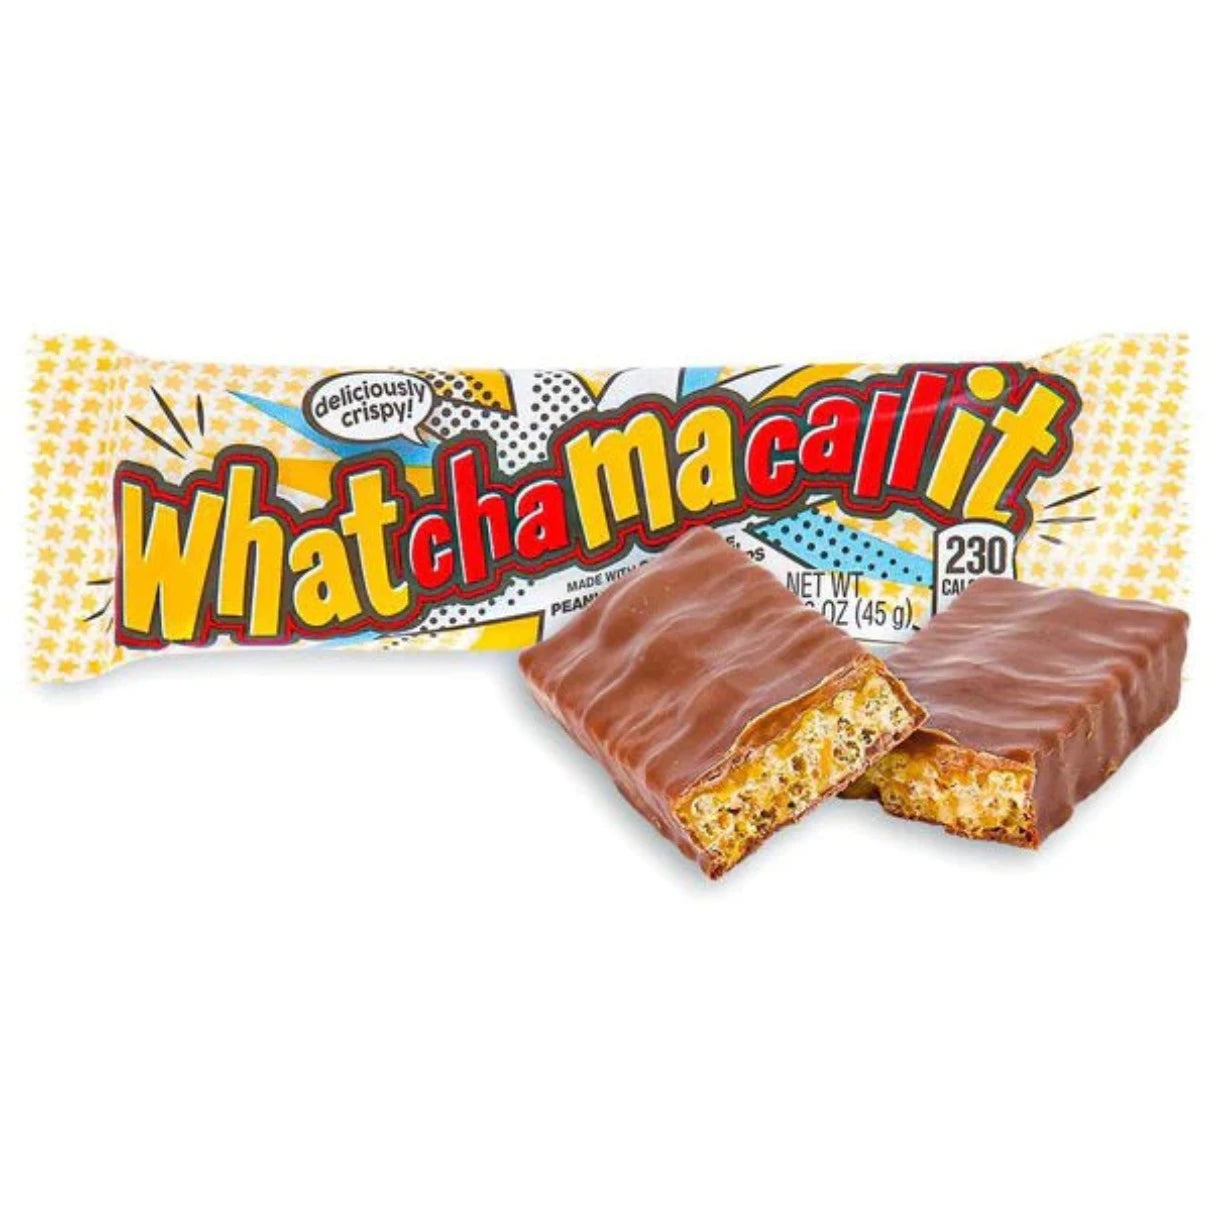 Whatchamacallit Candy Bars 1.6oz  - 36ct